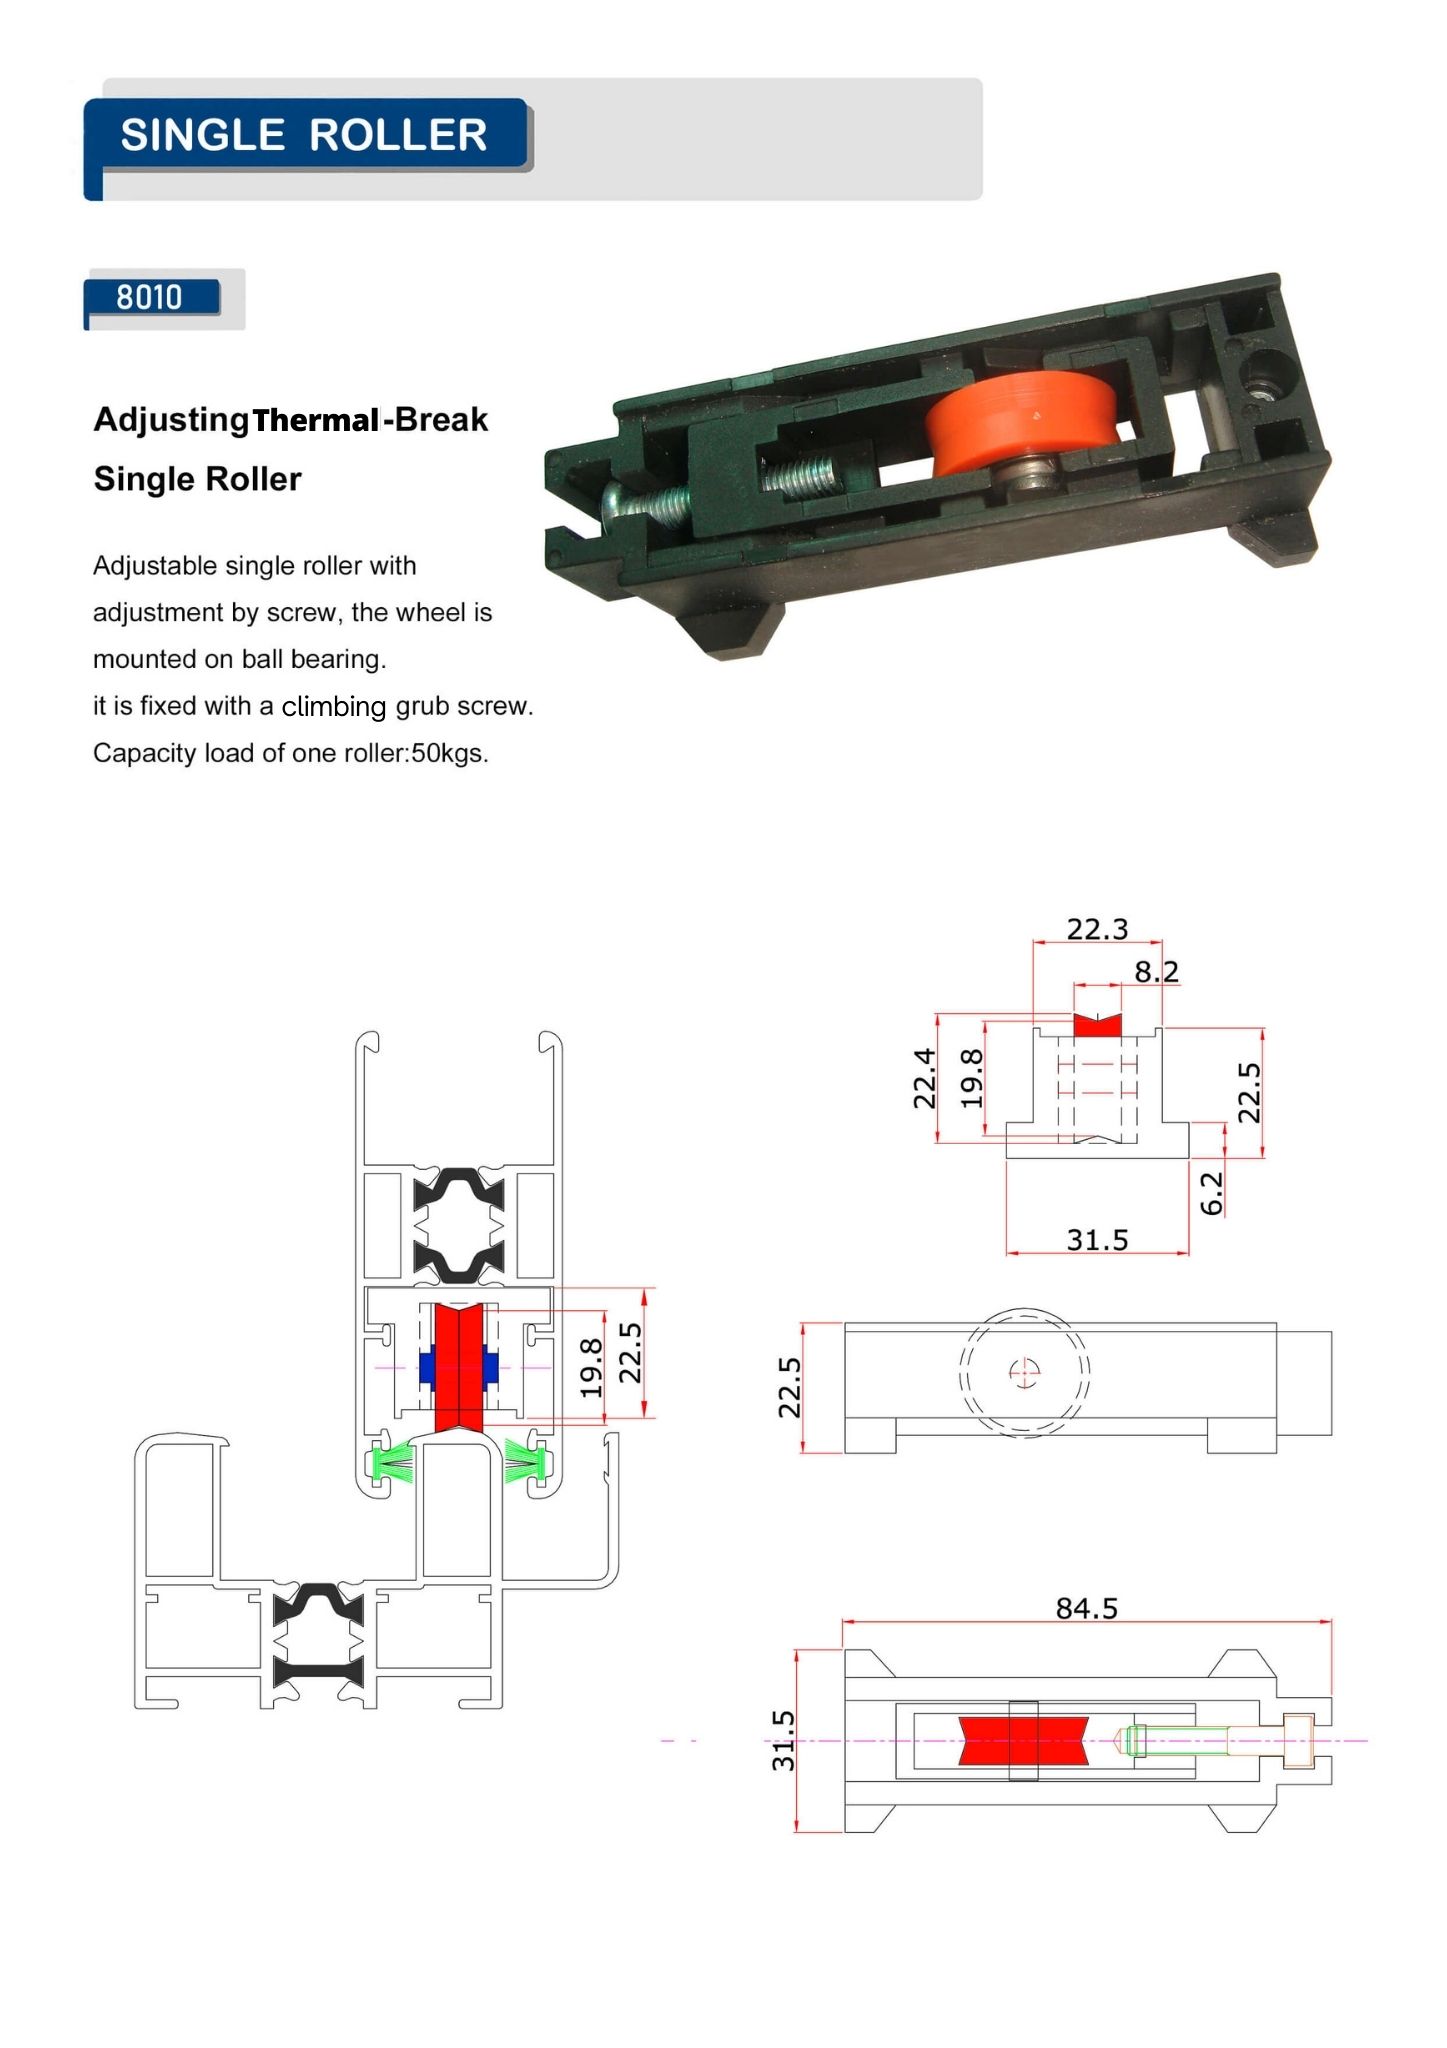 Adjusting Thermal-Break Single Roller